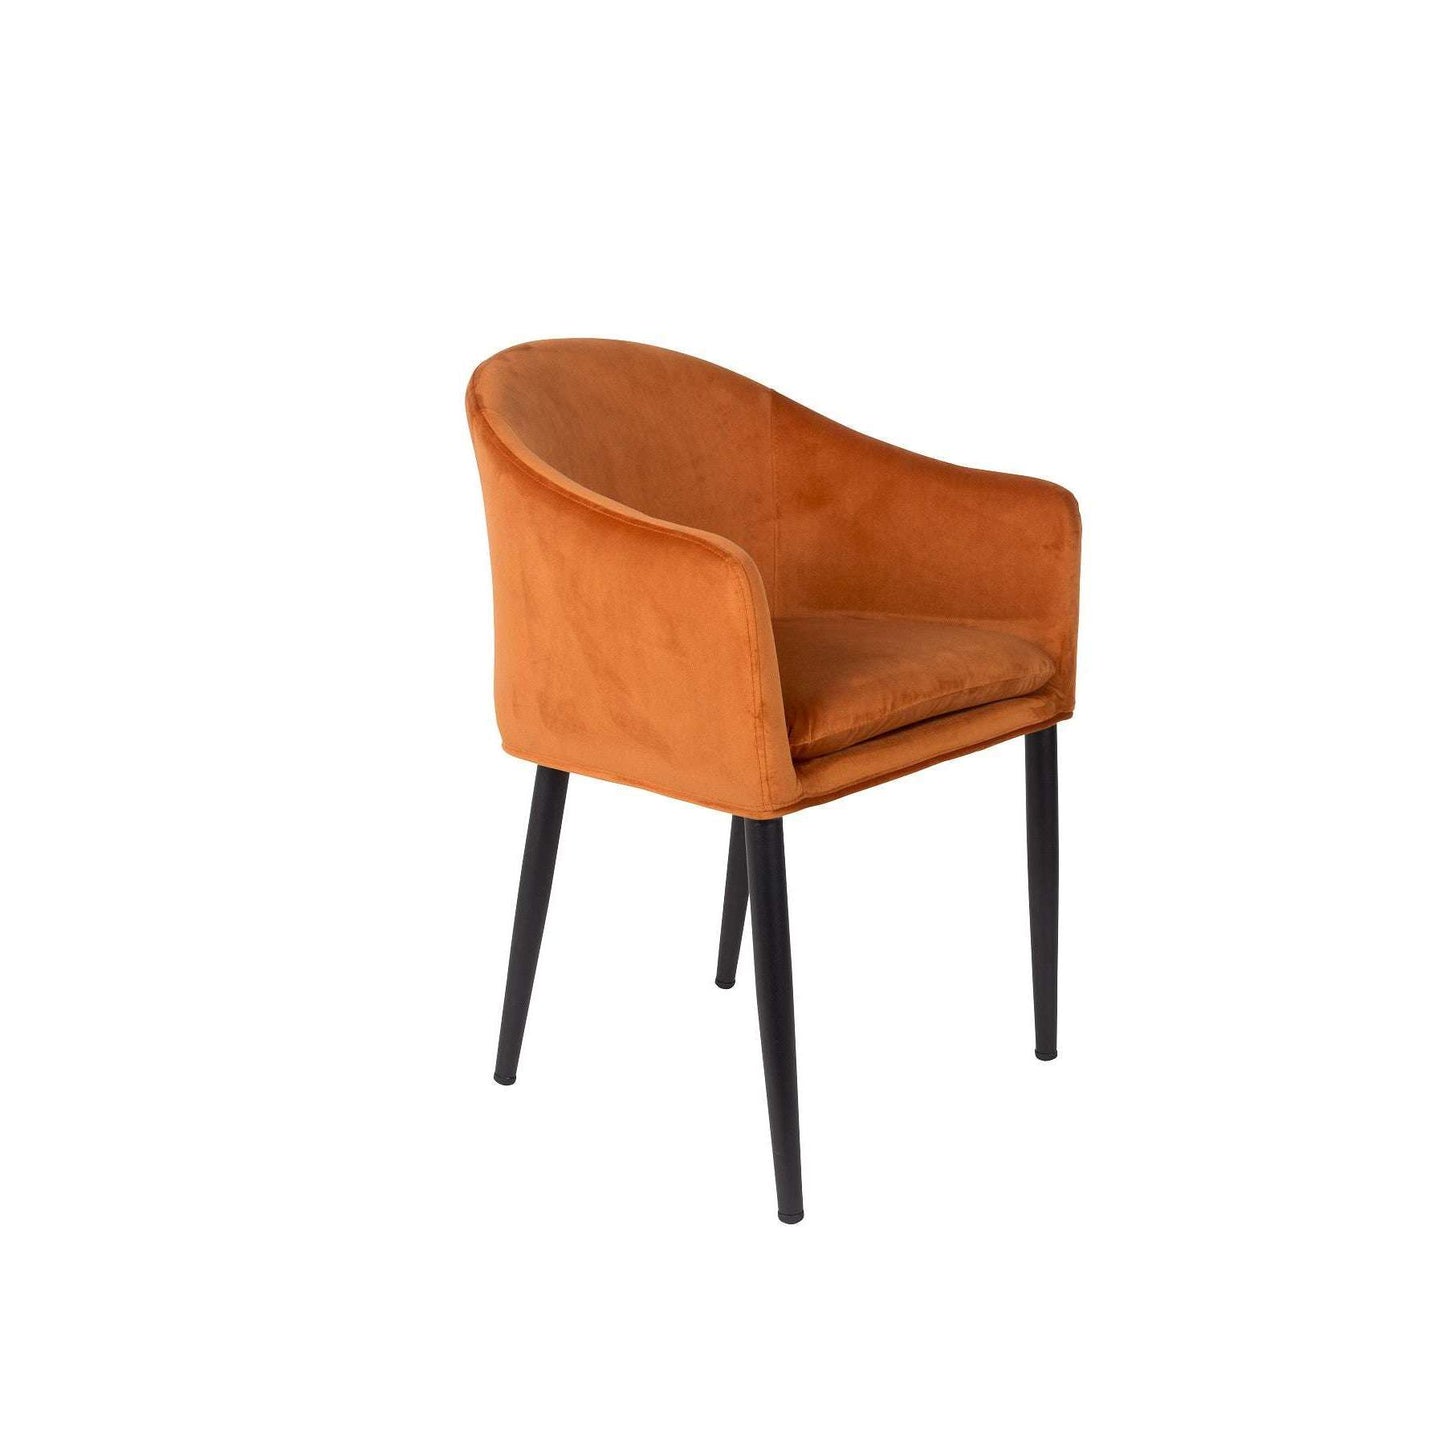 Staerkk stoel met armleuningen catelyn oranje 55,5 x 57 x 77 cm